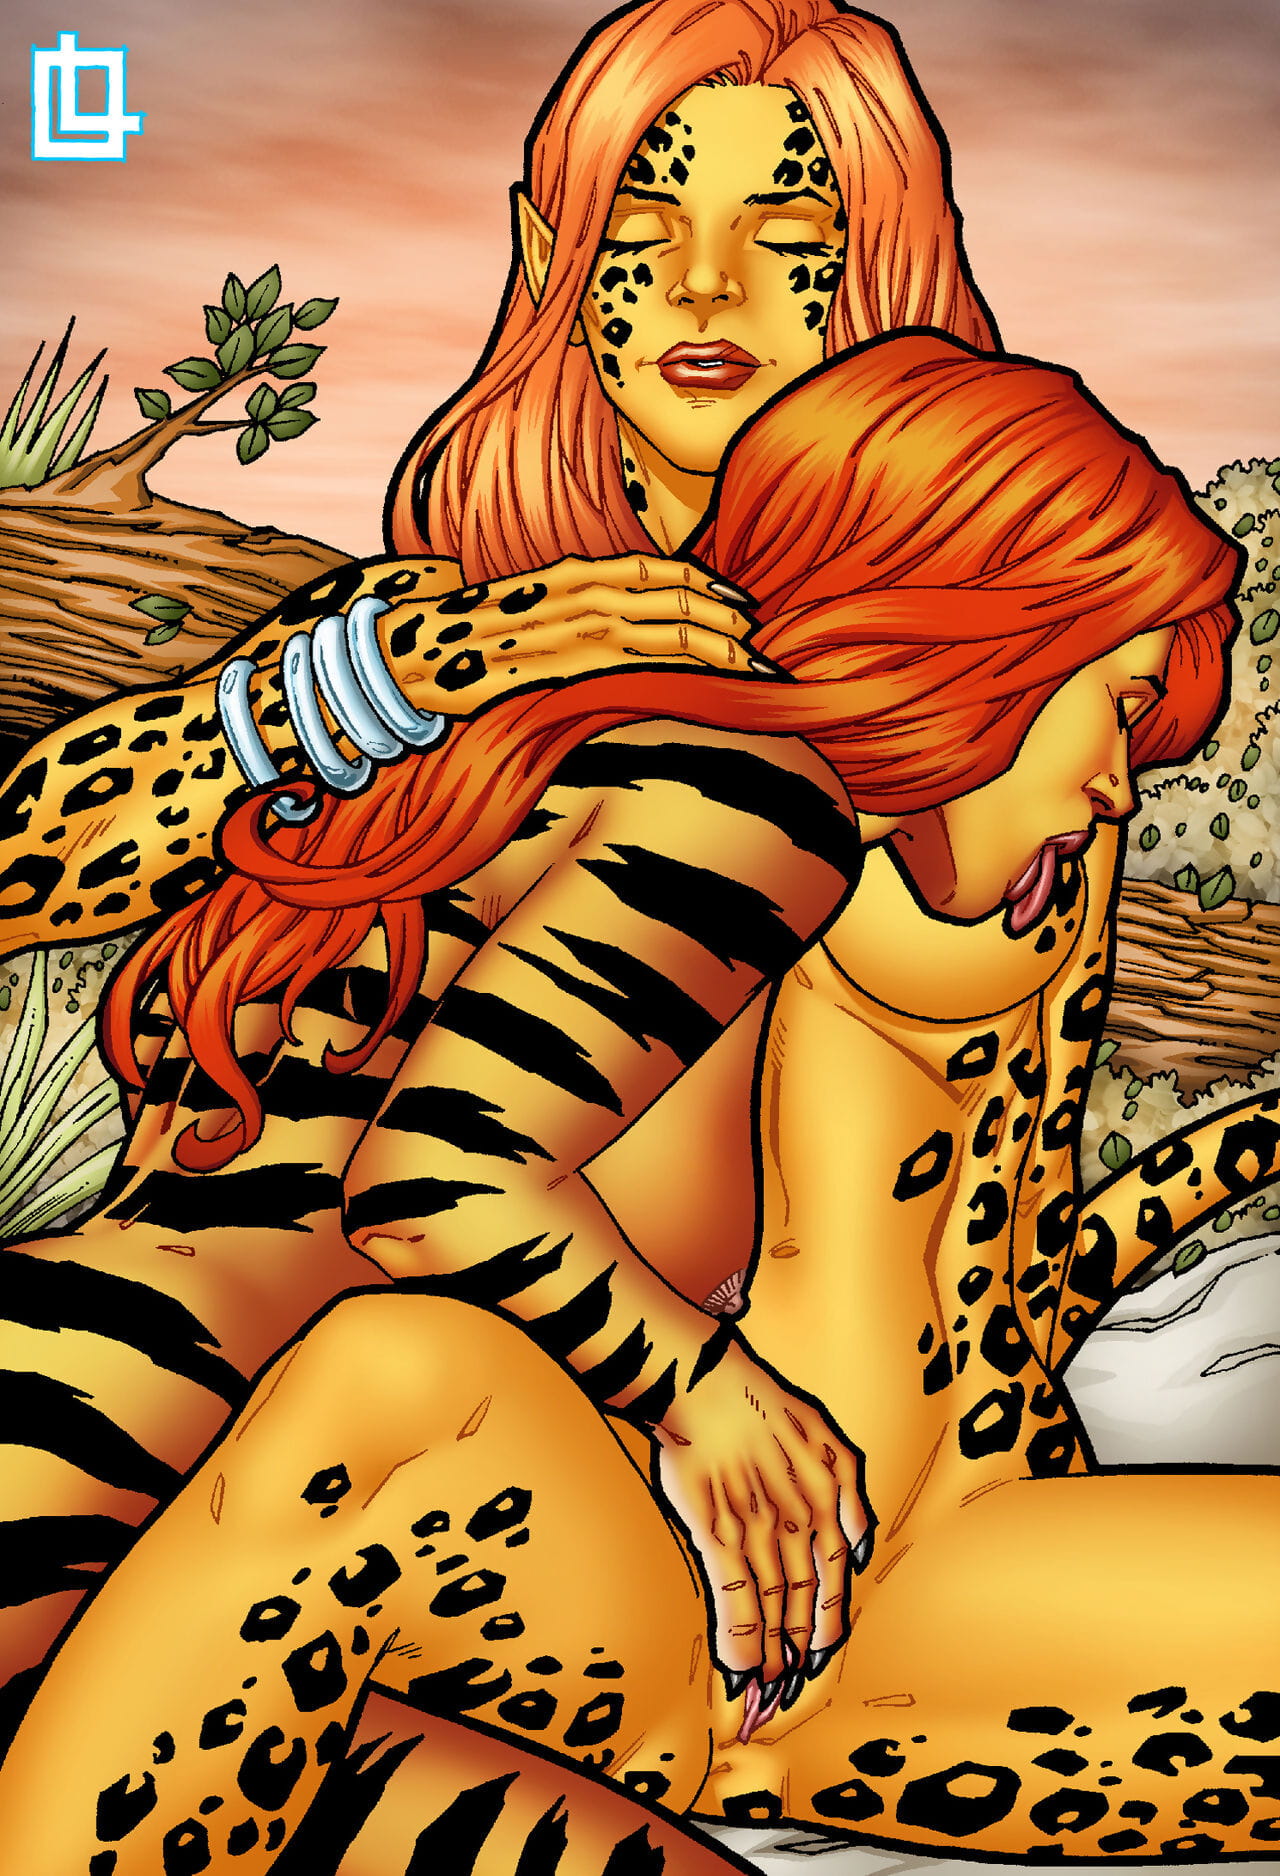 Leandro Comics Tigra and Cheetah page 1